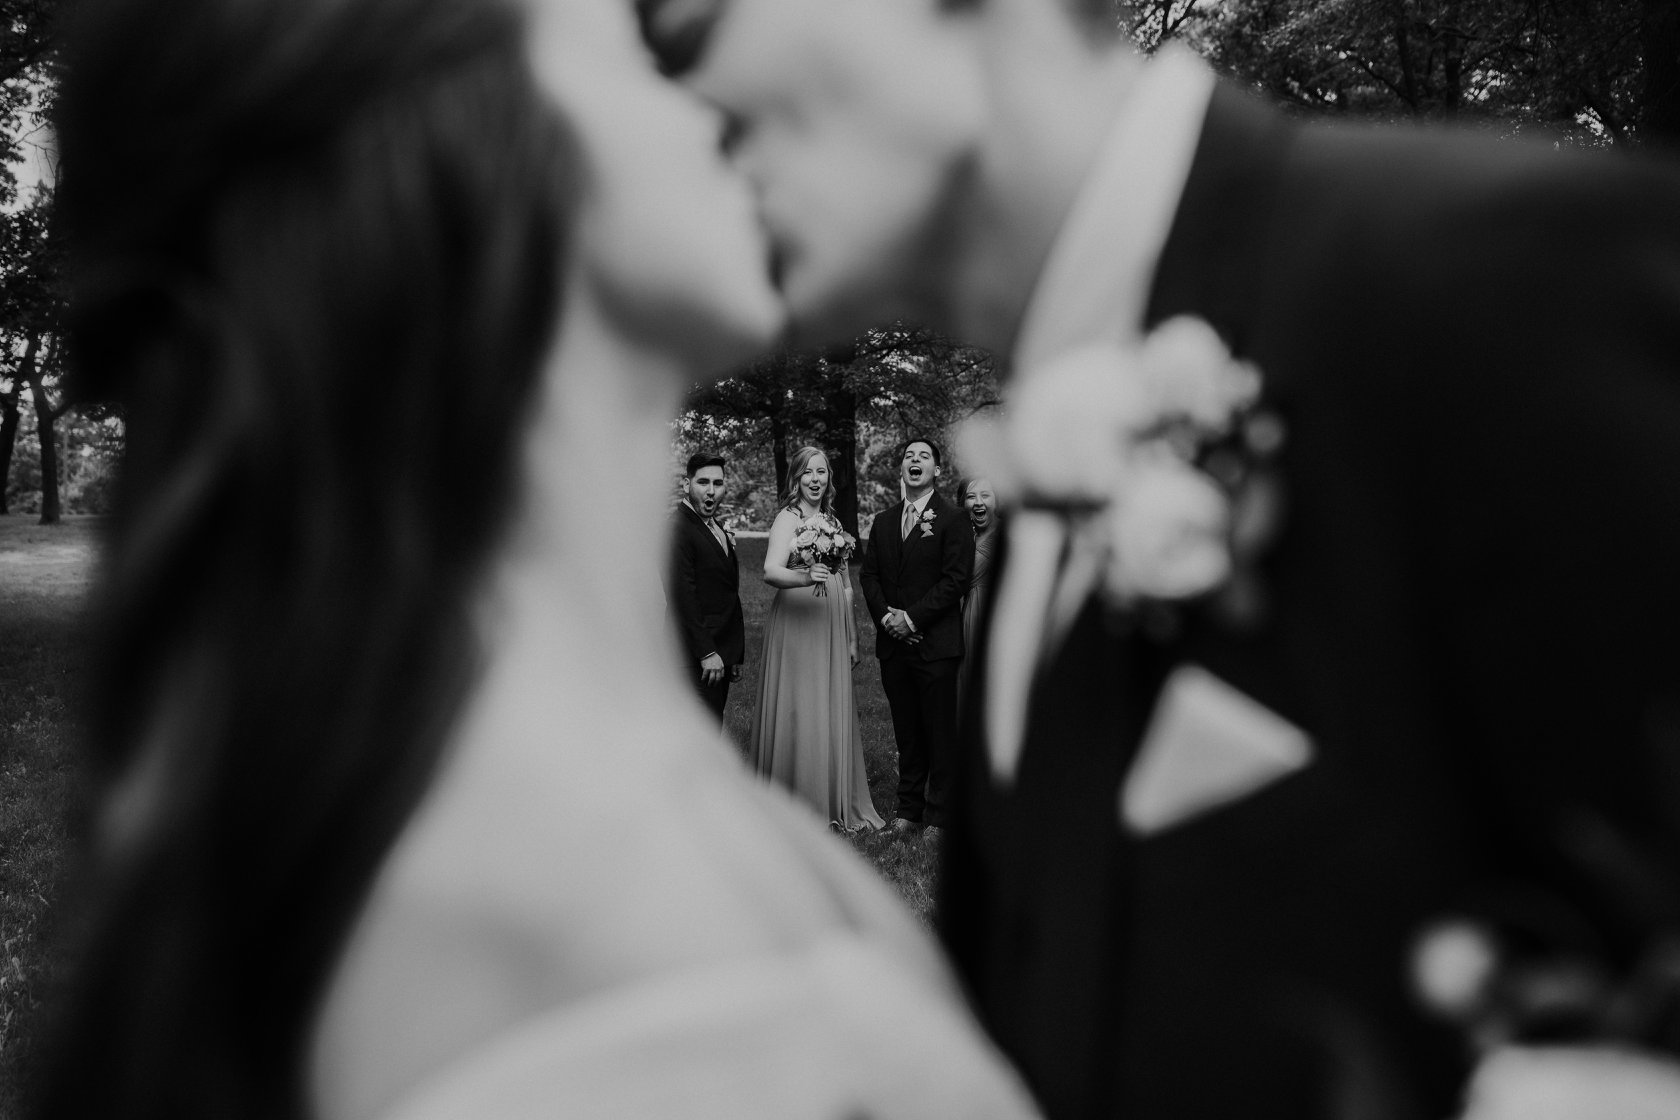 A monochrome close up shot of a couple kissing